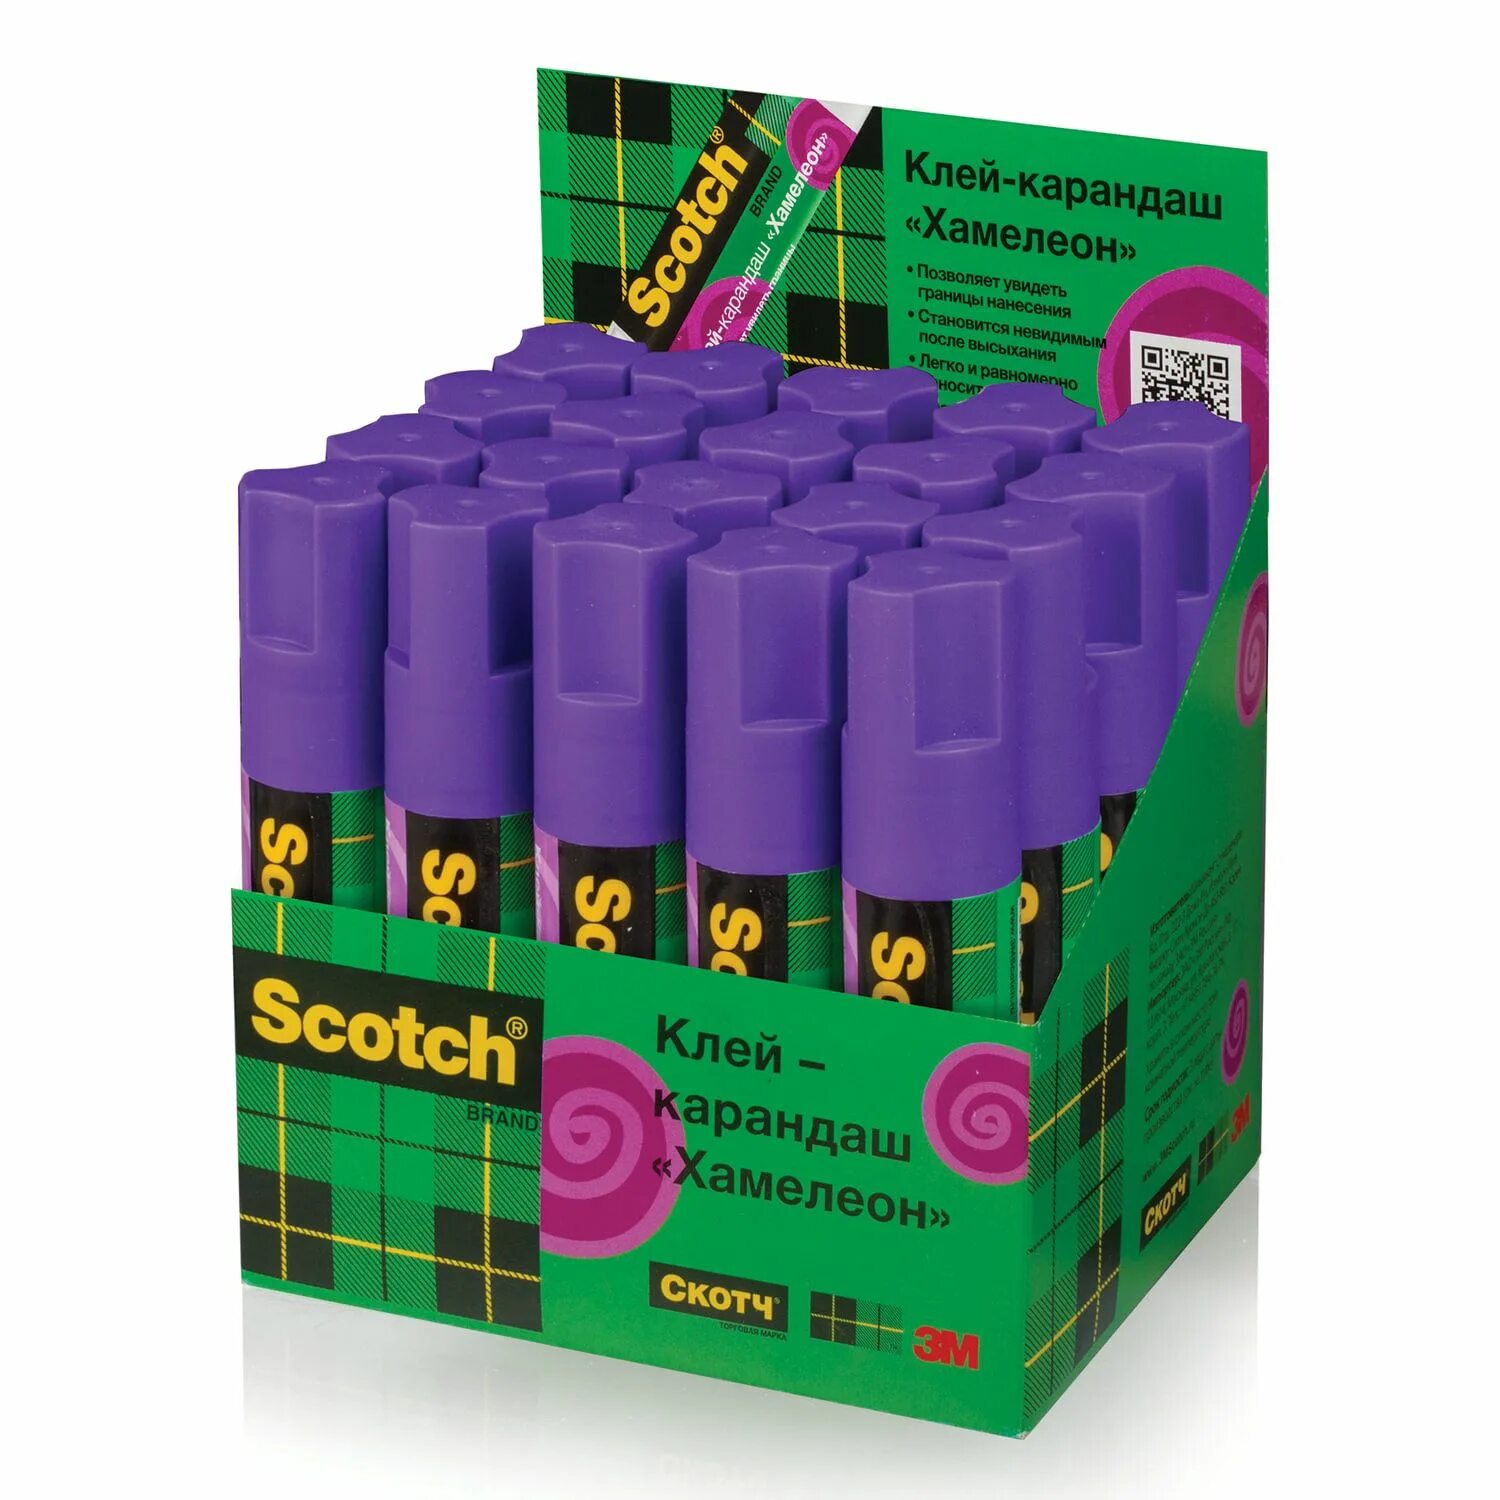 Клей-карандаш Scotch, 15 г. Scotch клей карандаш. Клей-карандаш 3m 6115d20 Scotch хамелеон 7100025018 15гр фиолетовый - 20 шт. Клей карандаш хамелеон.